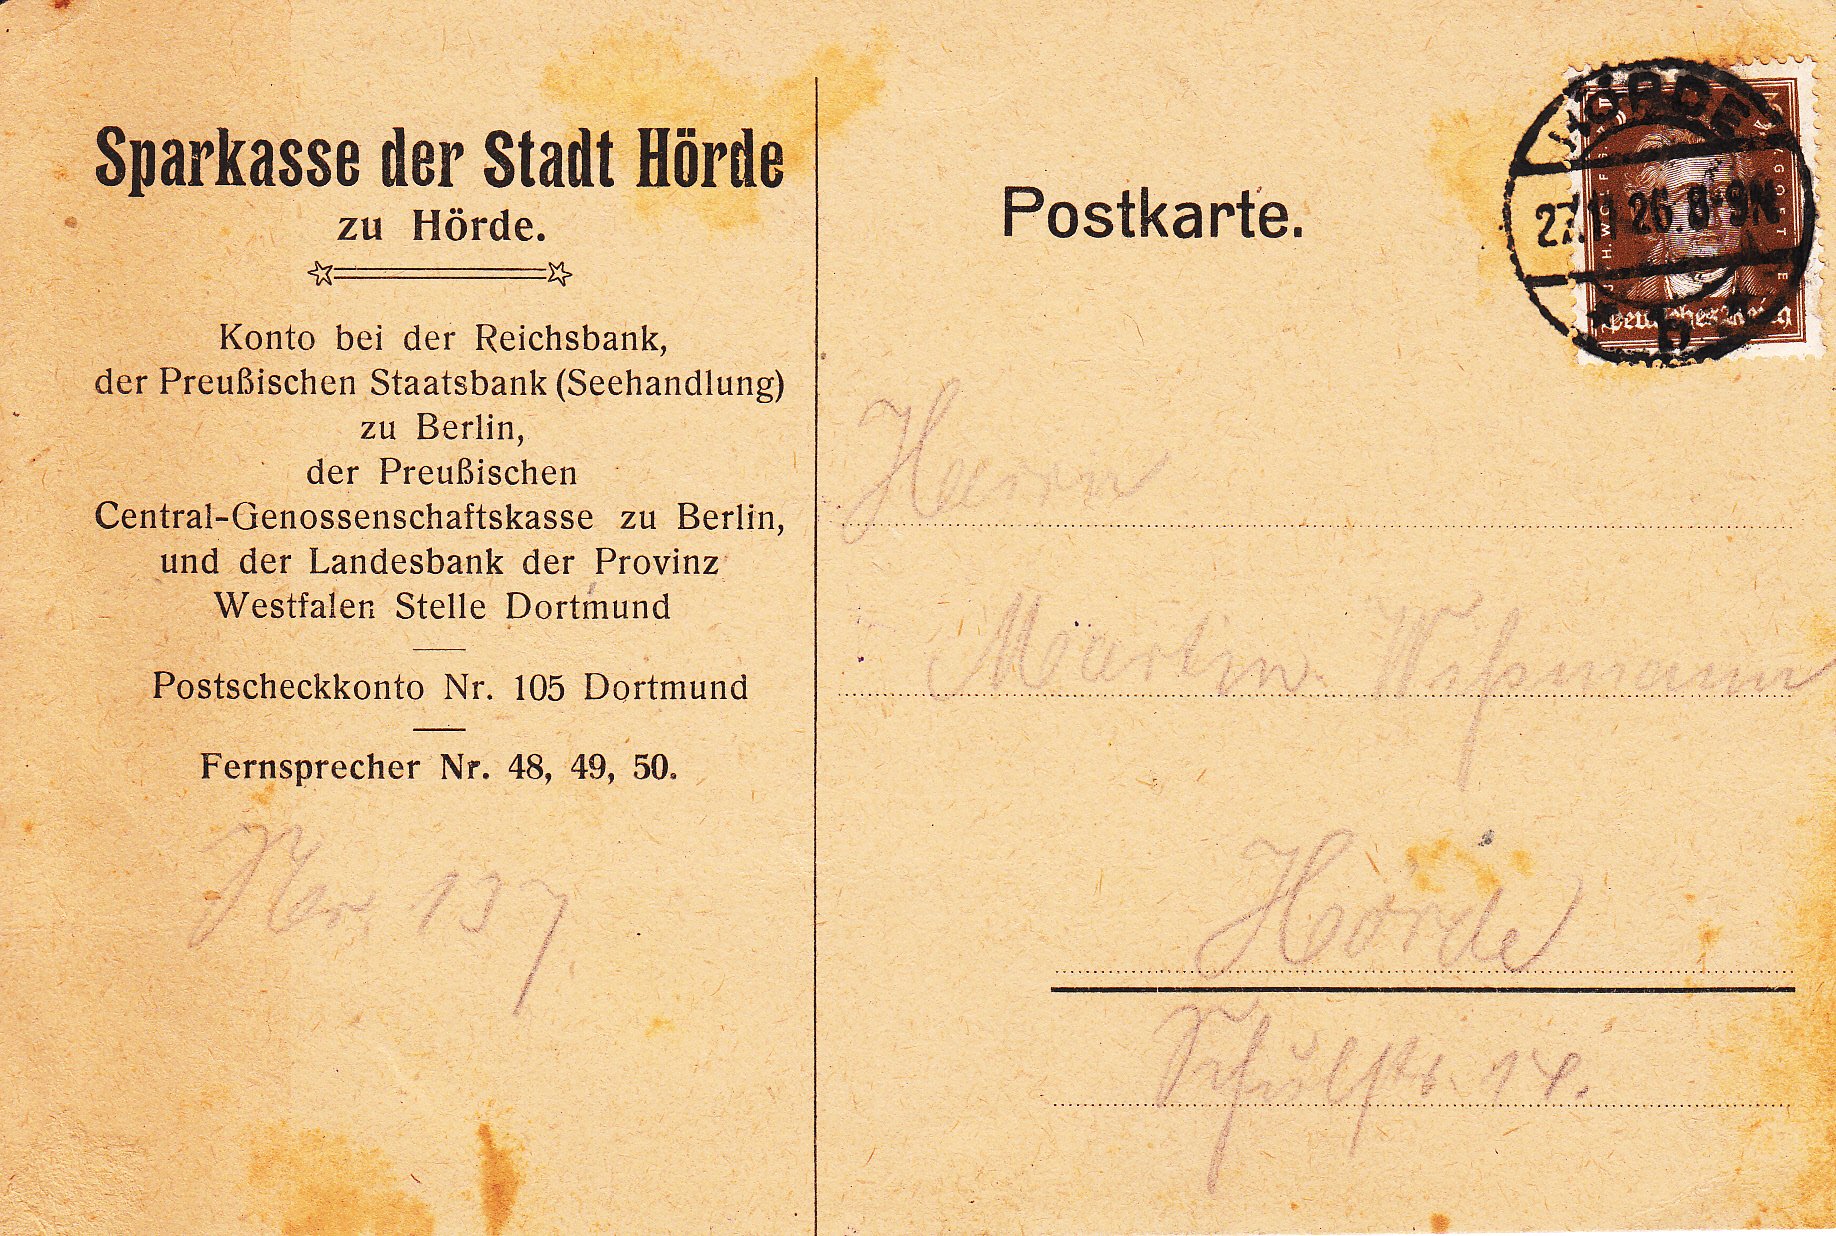 Postkarte der Sparkasse Hörde 1926 (Museum des Heimatvereins Hörde CC BY-NC-SA)